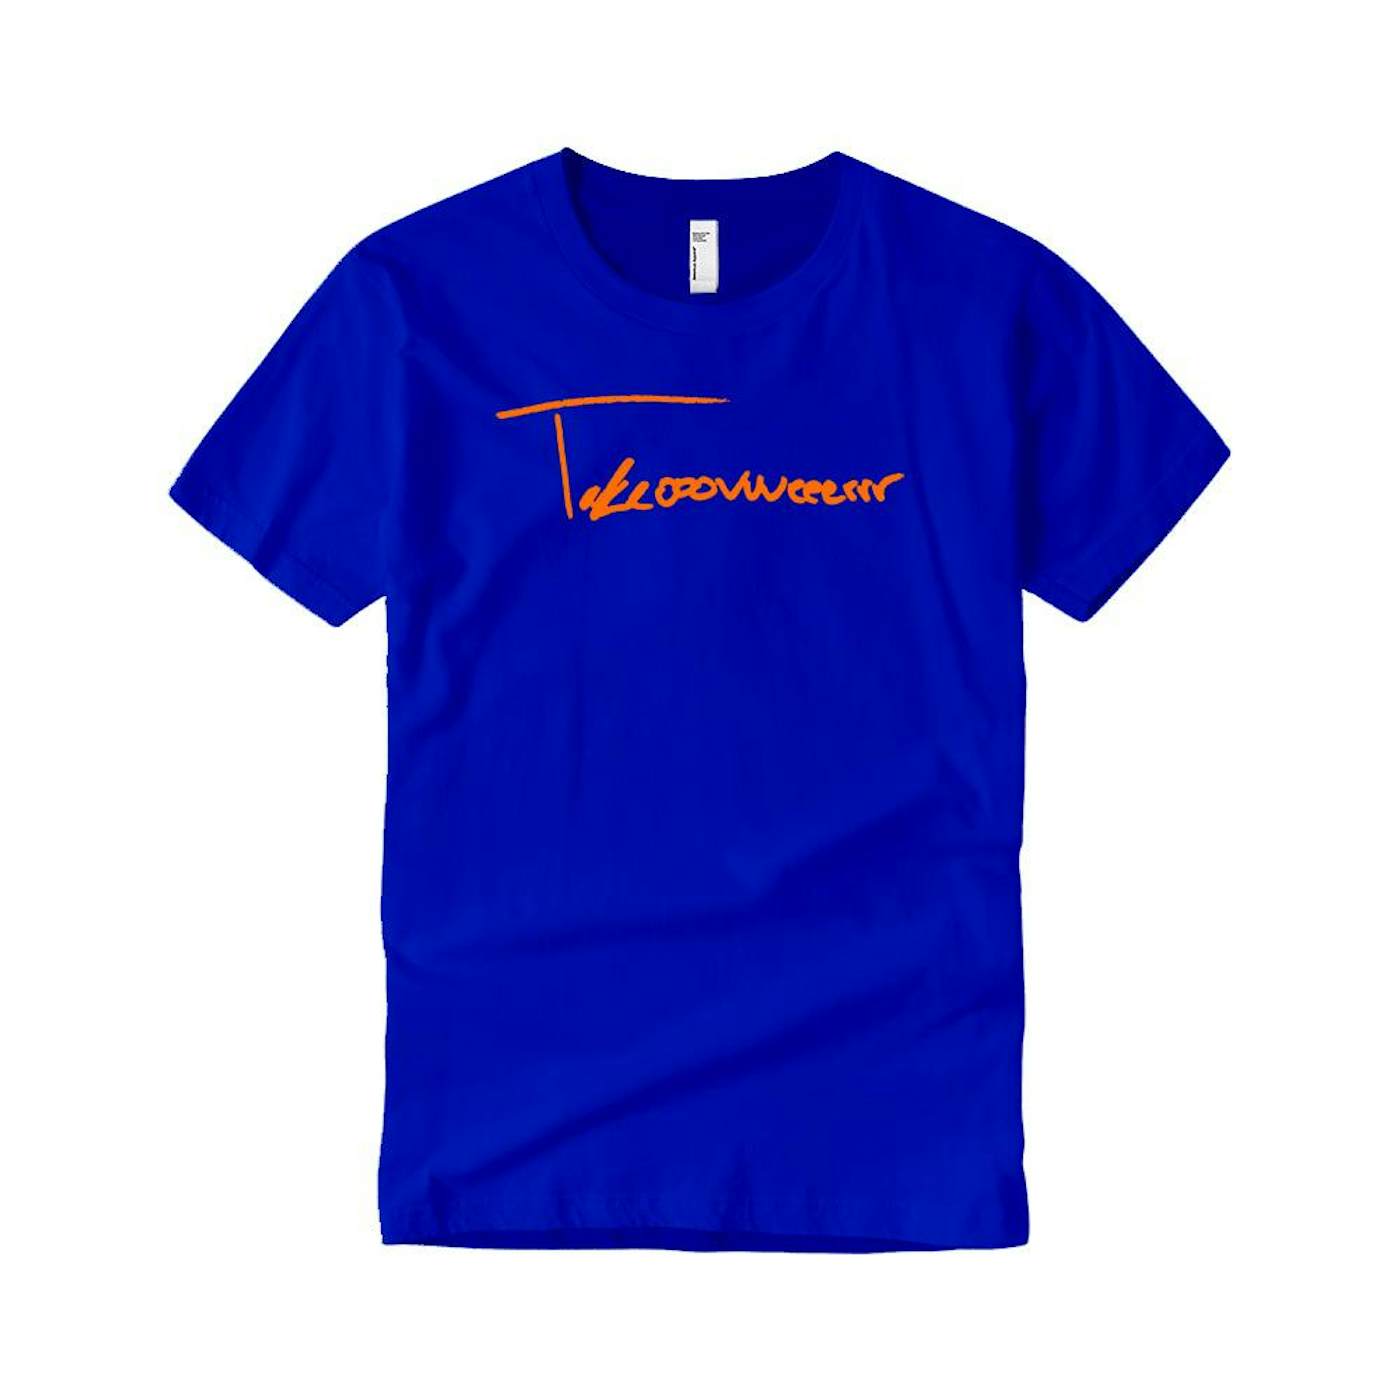 Taylor J Takeover Signature T-Shirt (Royal Blue/Orange)